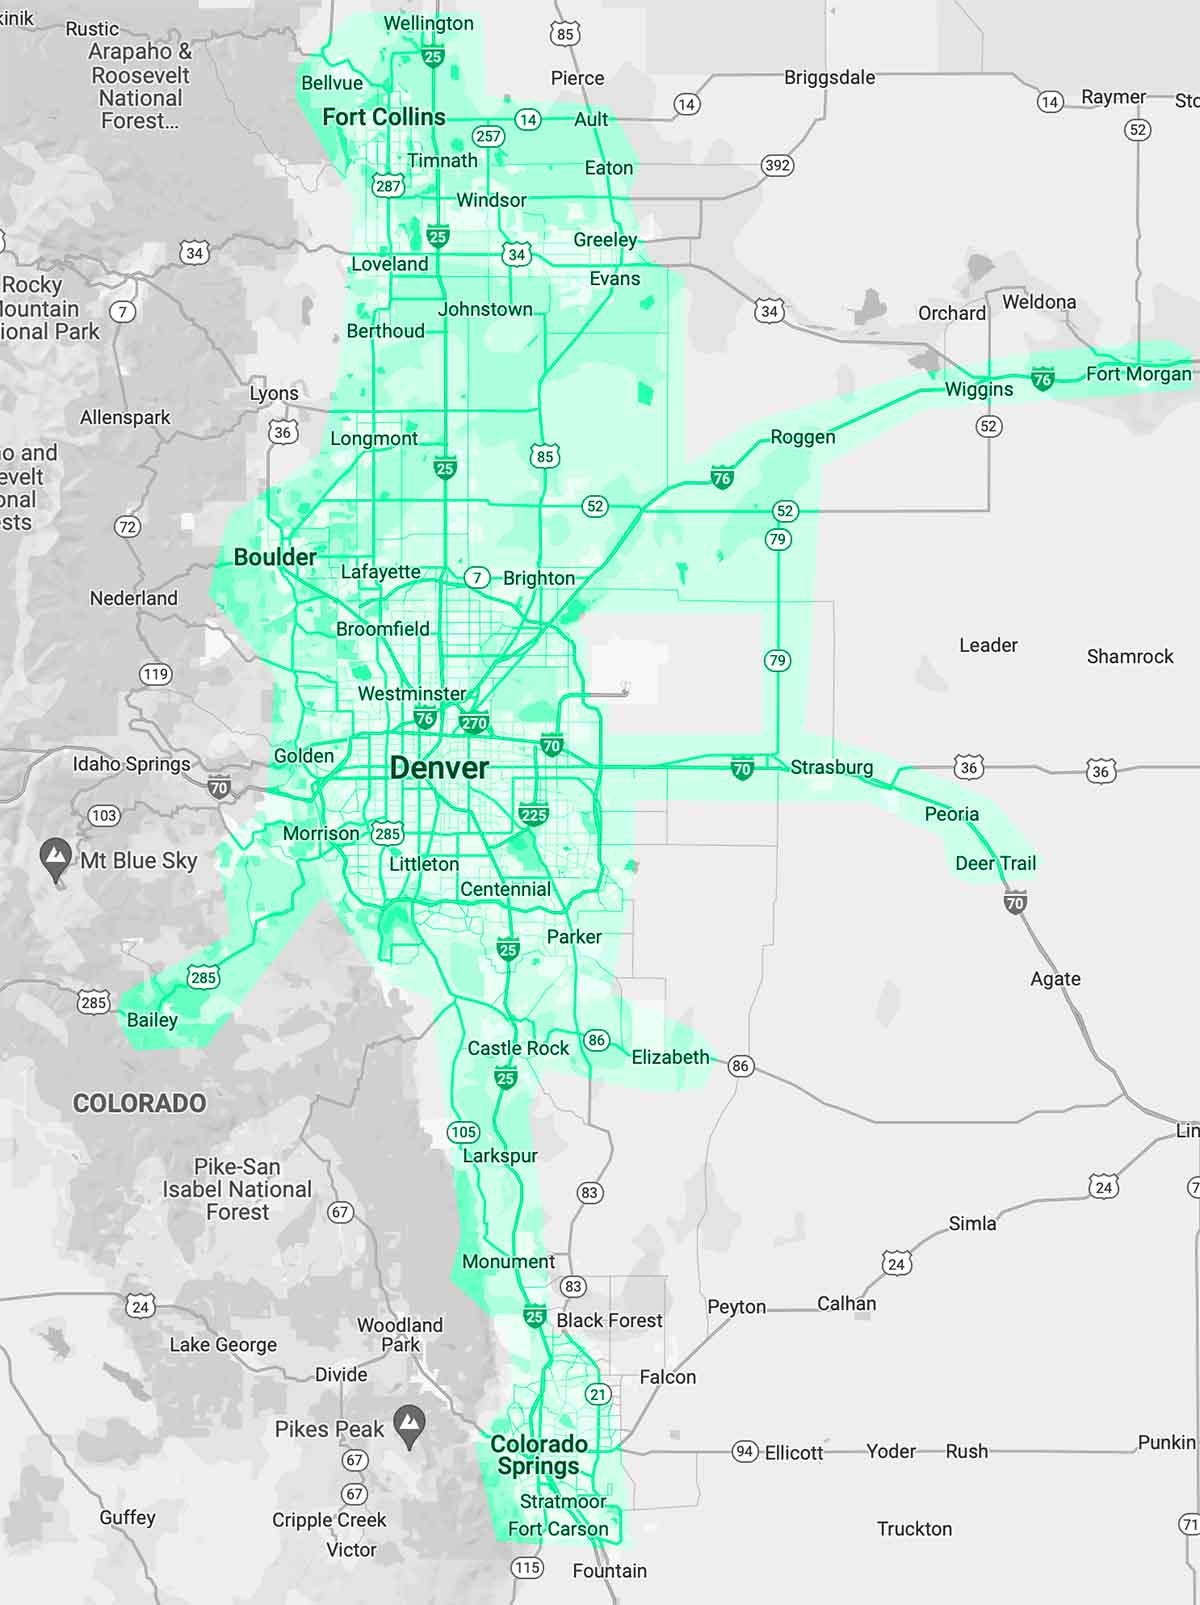 OBEX local services areas in Colorado